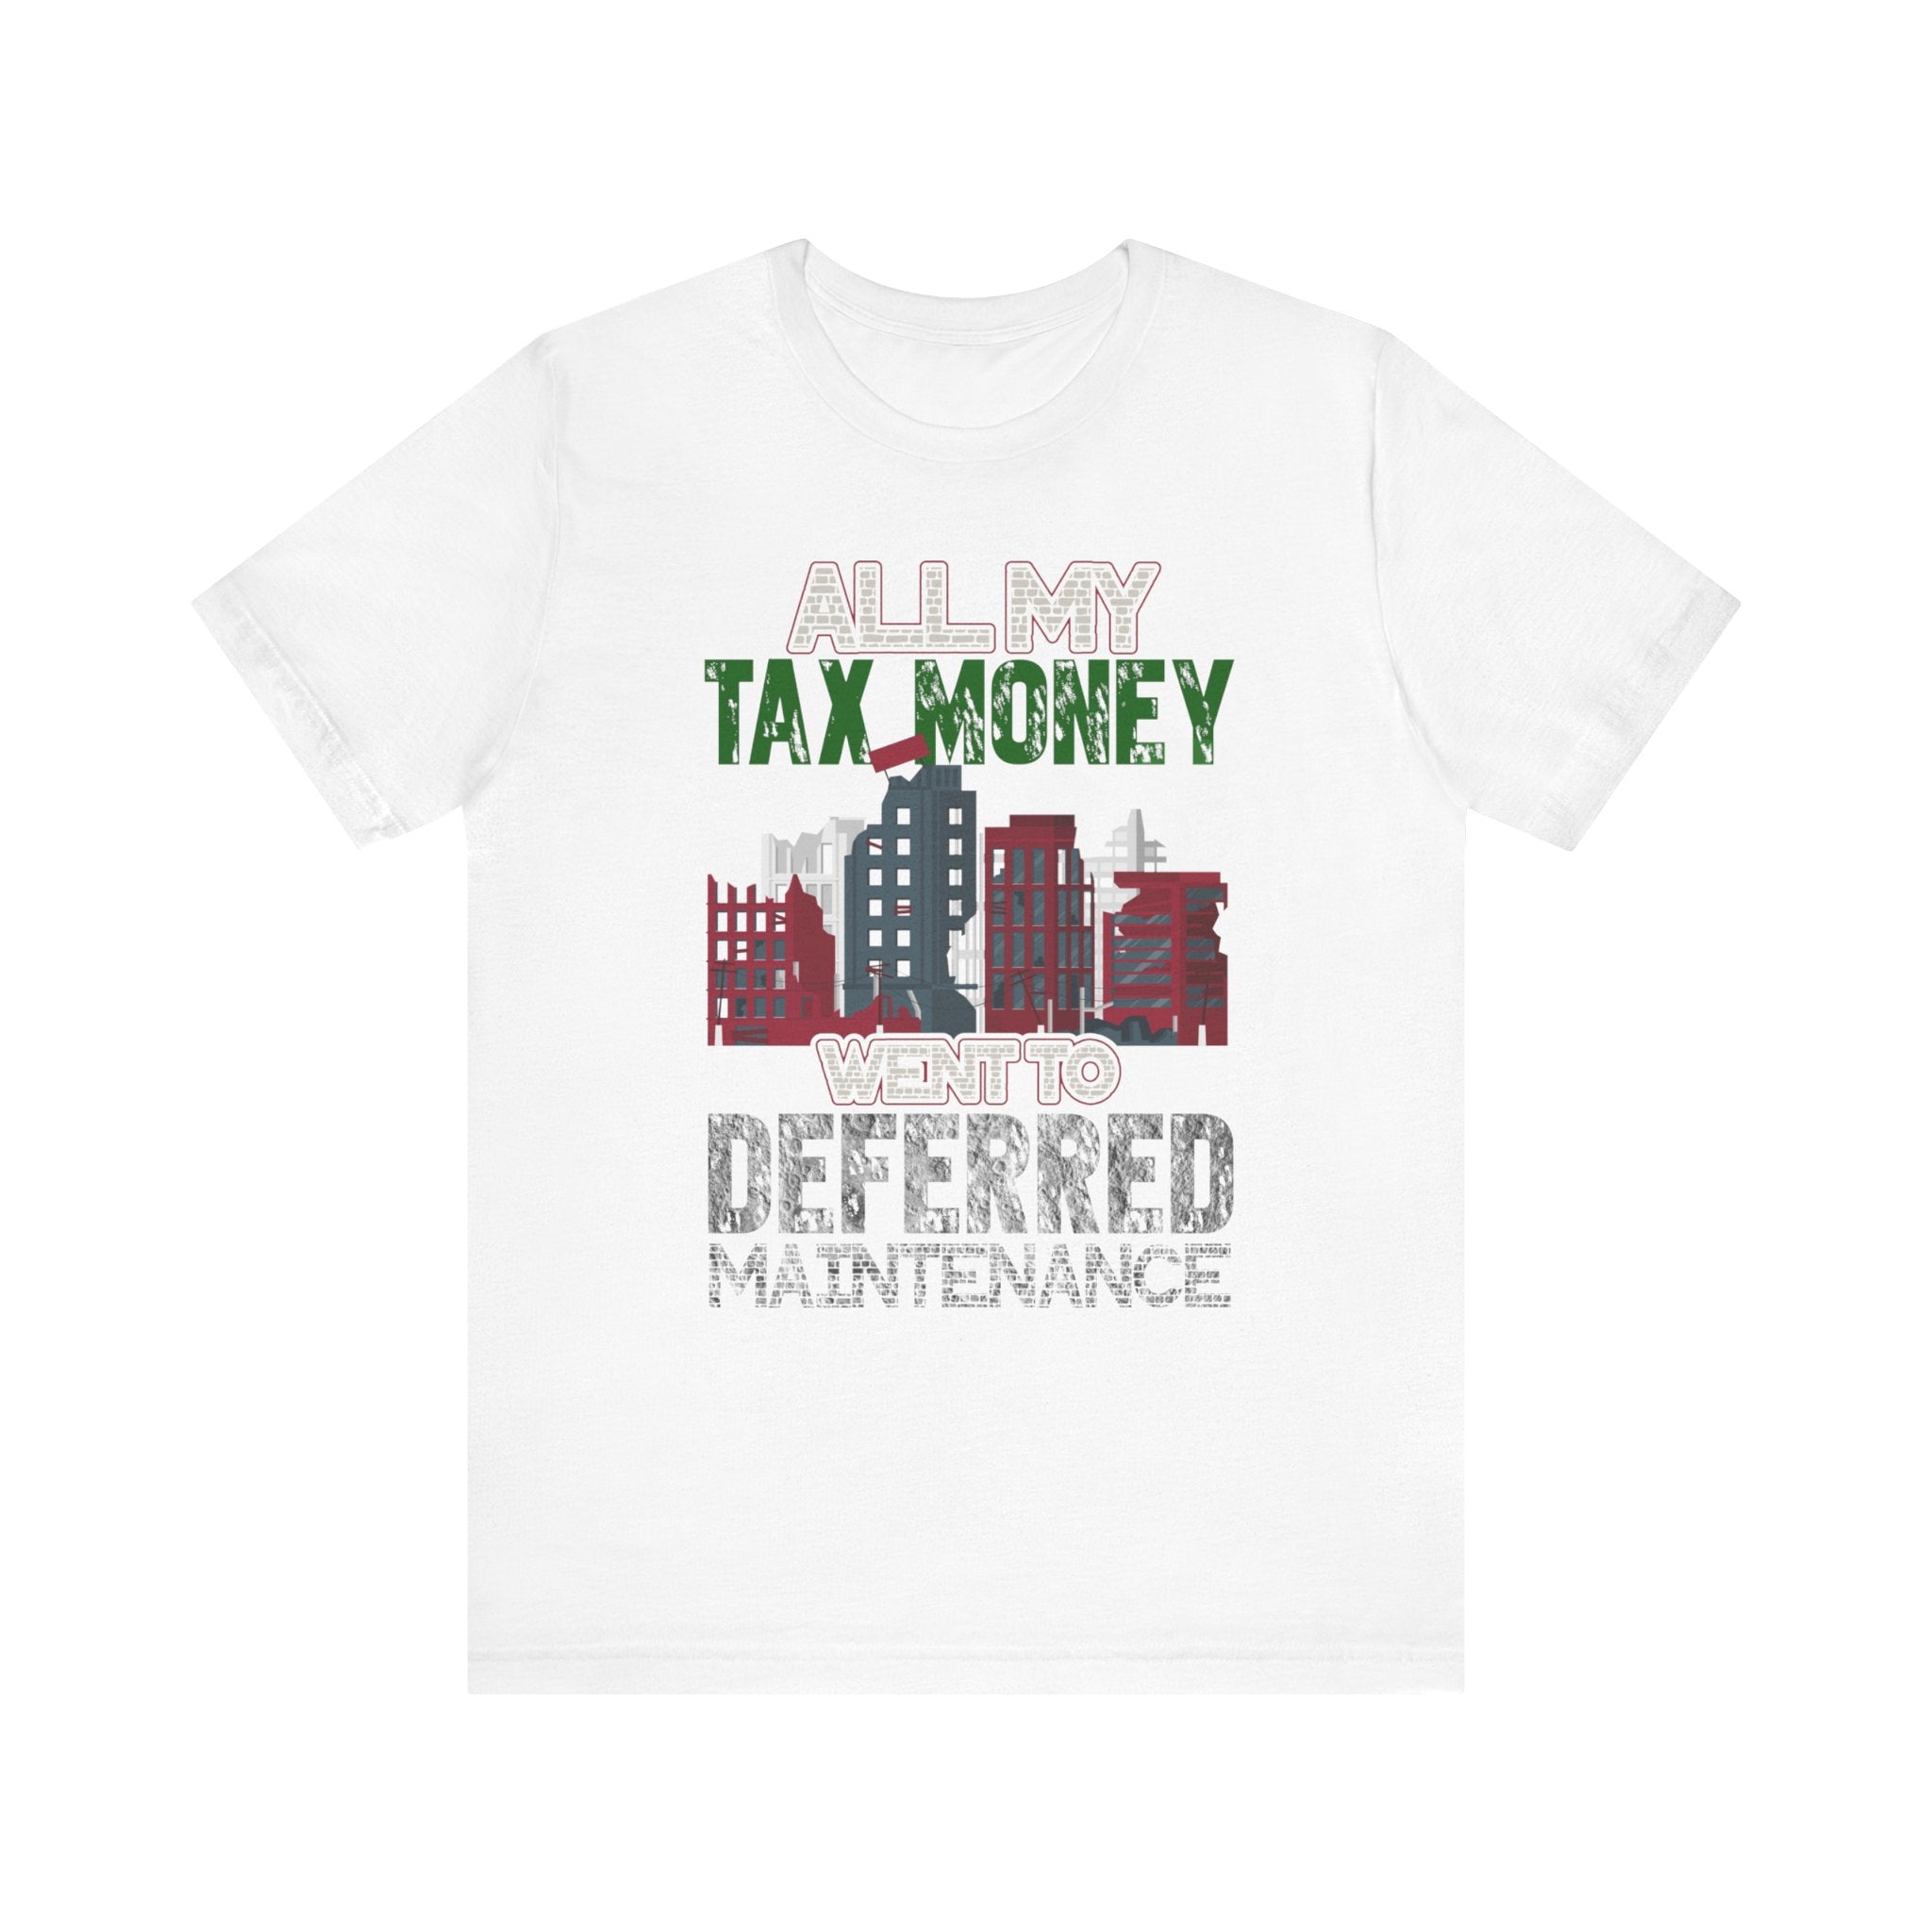 My Tax Money - Deferred Maintenance